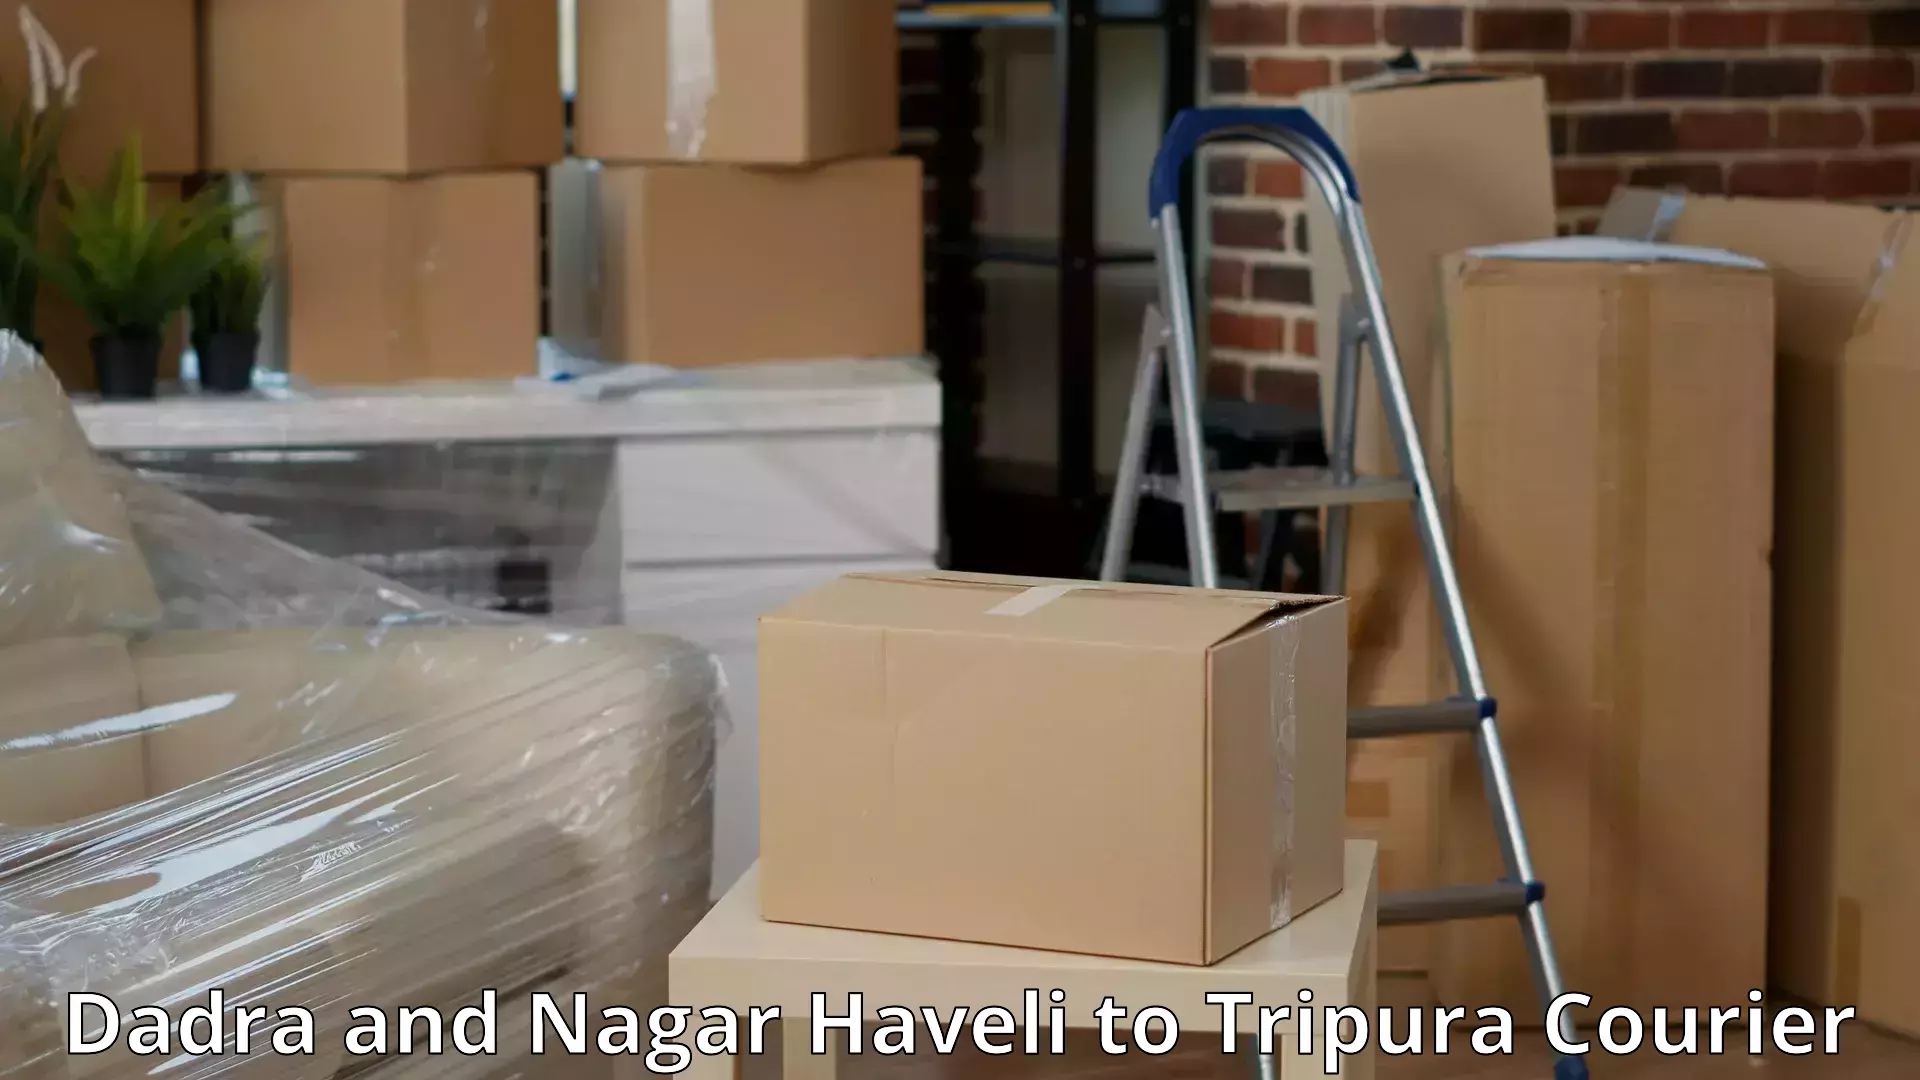 Furniture transport professionals Dadra and Nagar Haveli to Udaipur Tripura